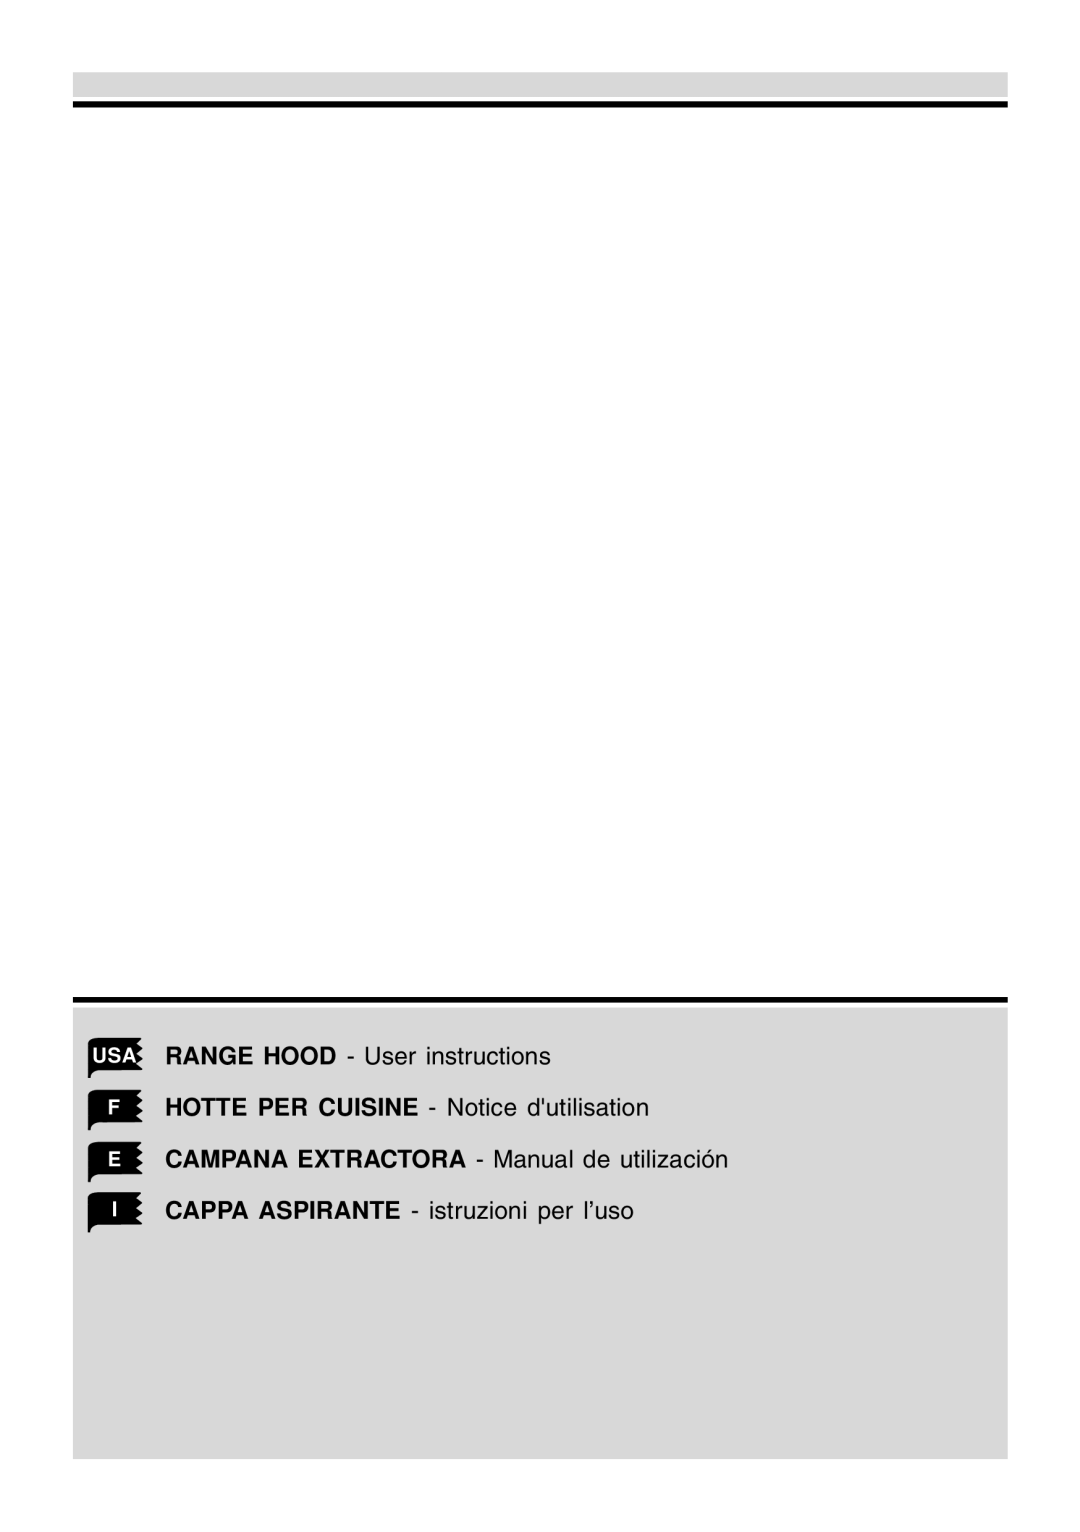 Elitair ZN-36 manual USA RANGE HOOD - User instructions, F HOTTE PER CUISINE - Notice dutilisation 